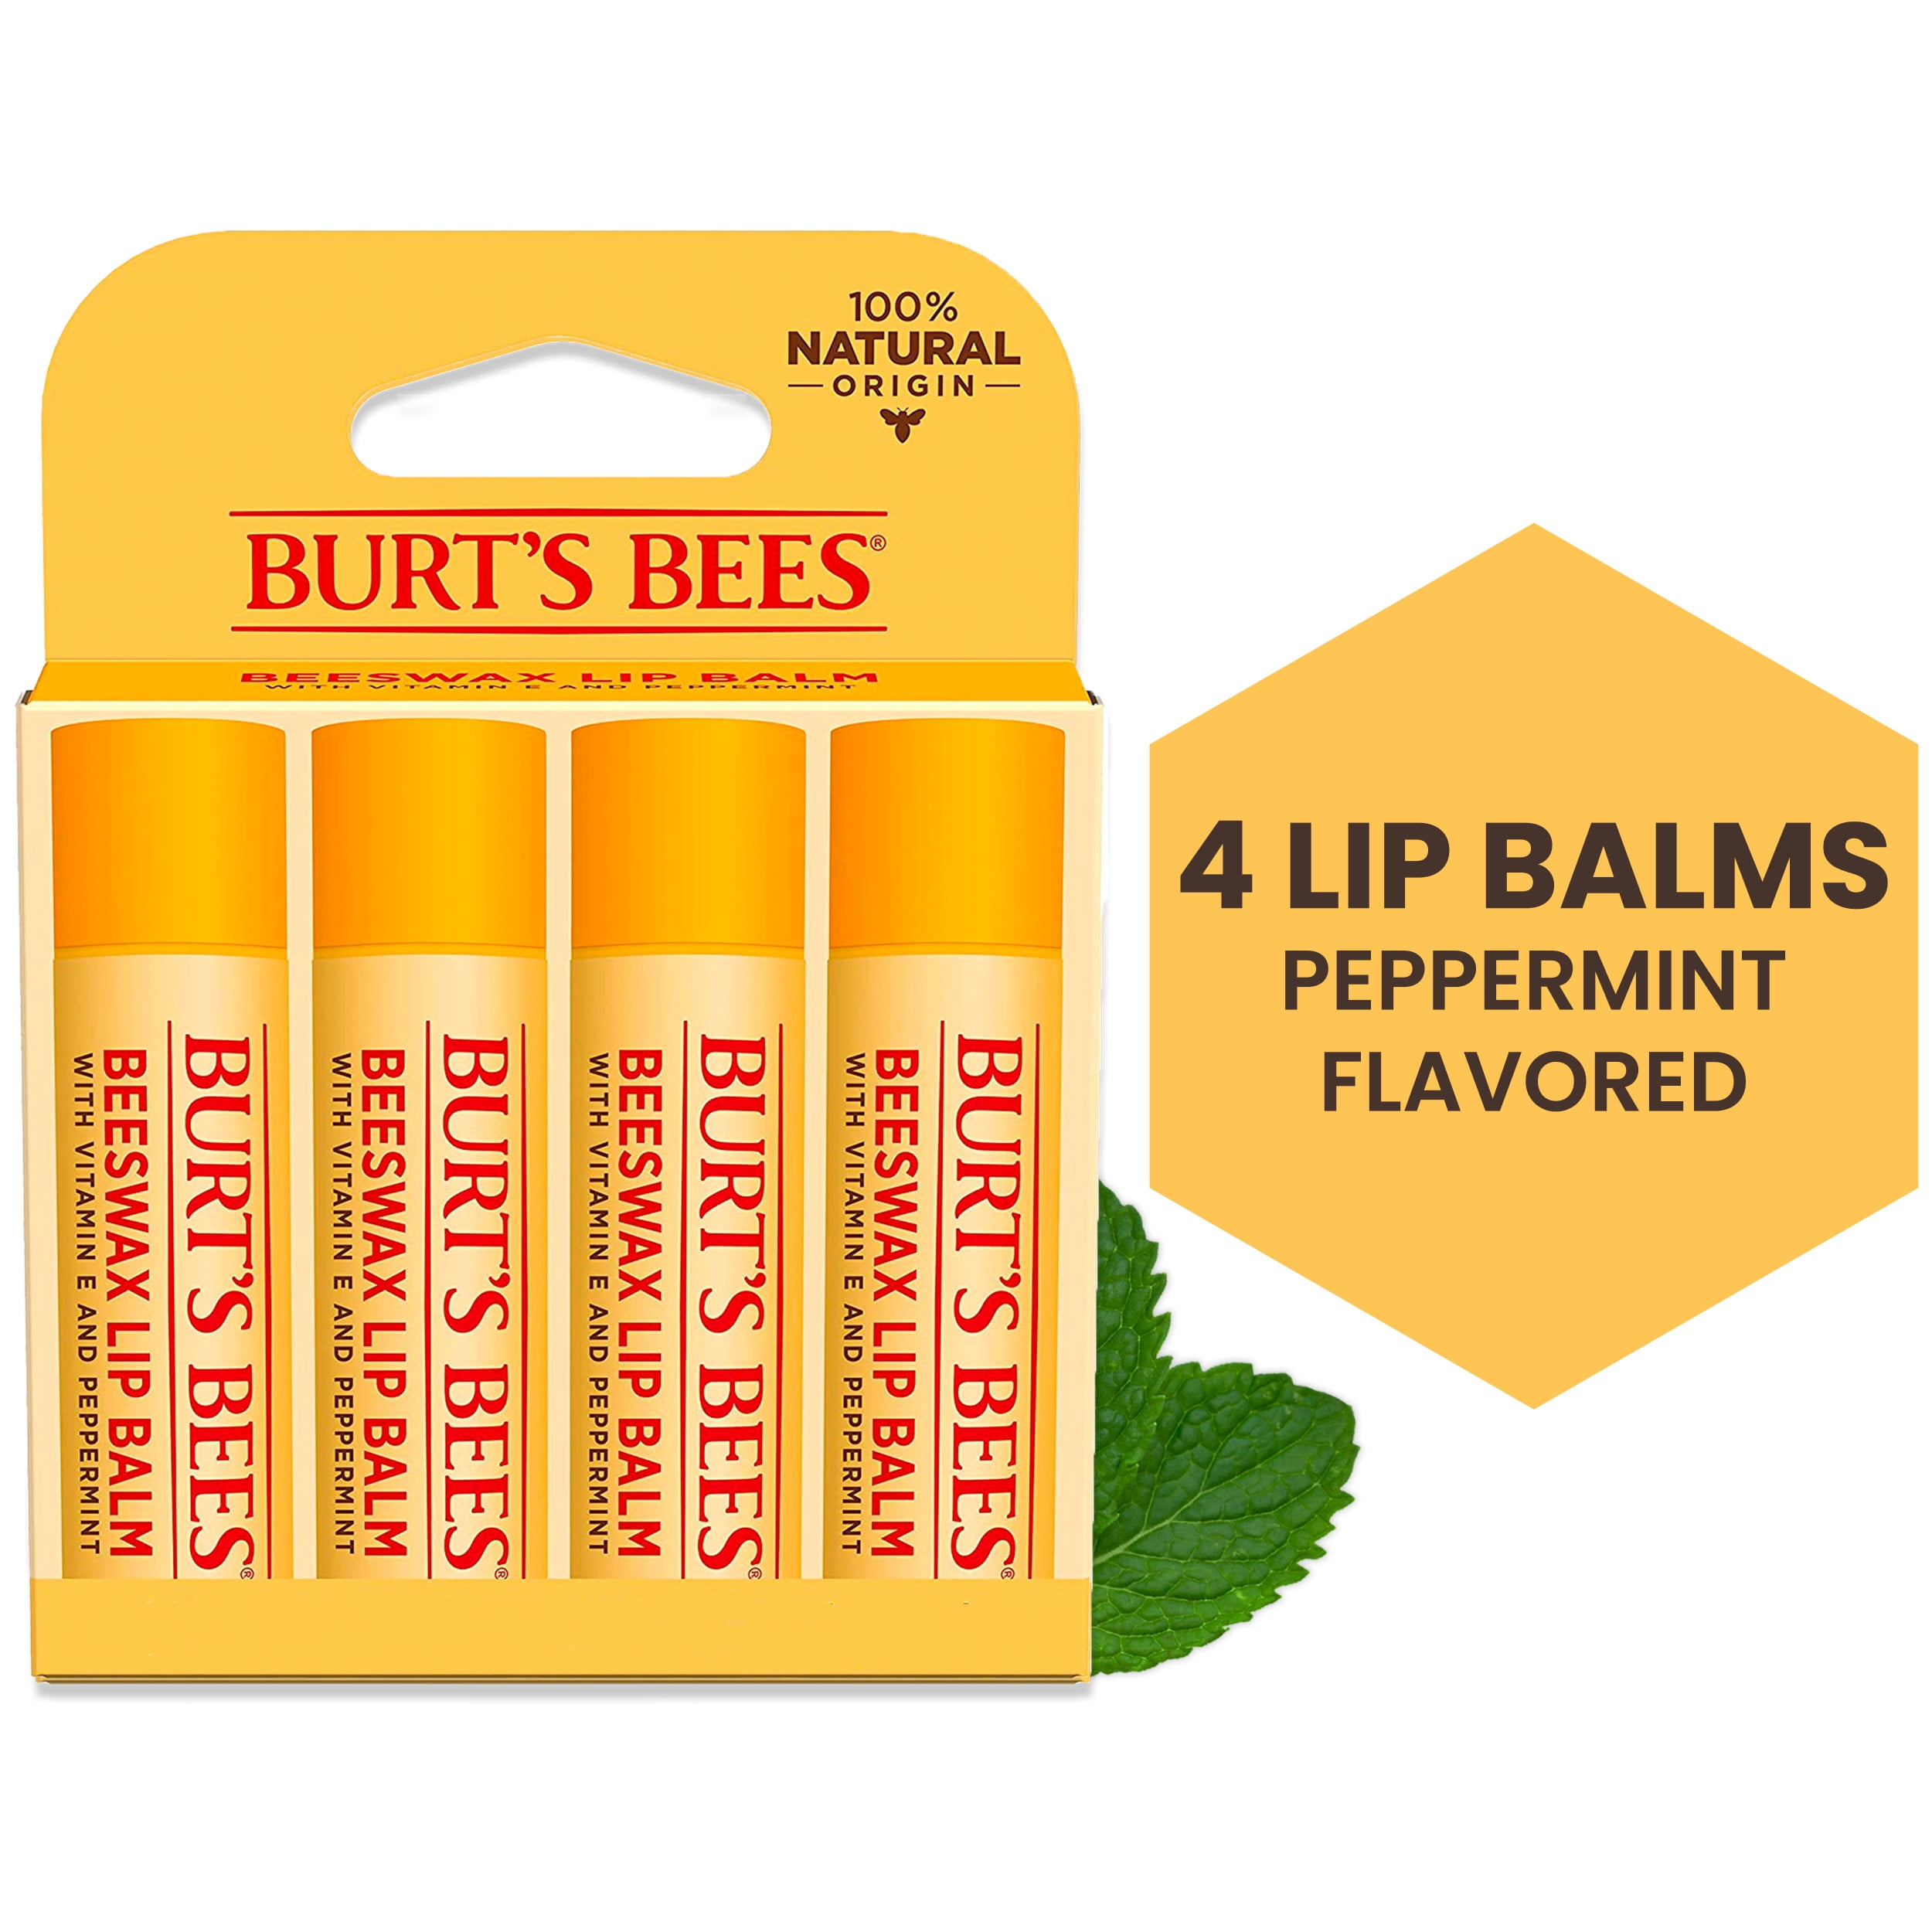 Burt's Bees Beeswax Lip Balm – BevMo!